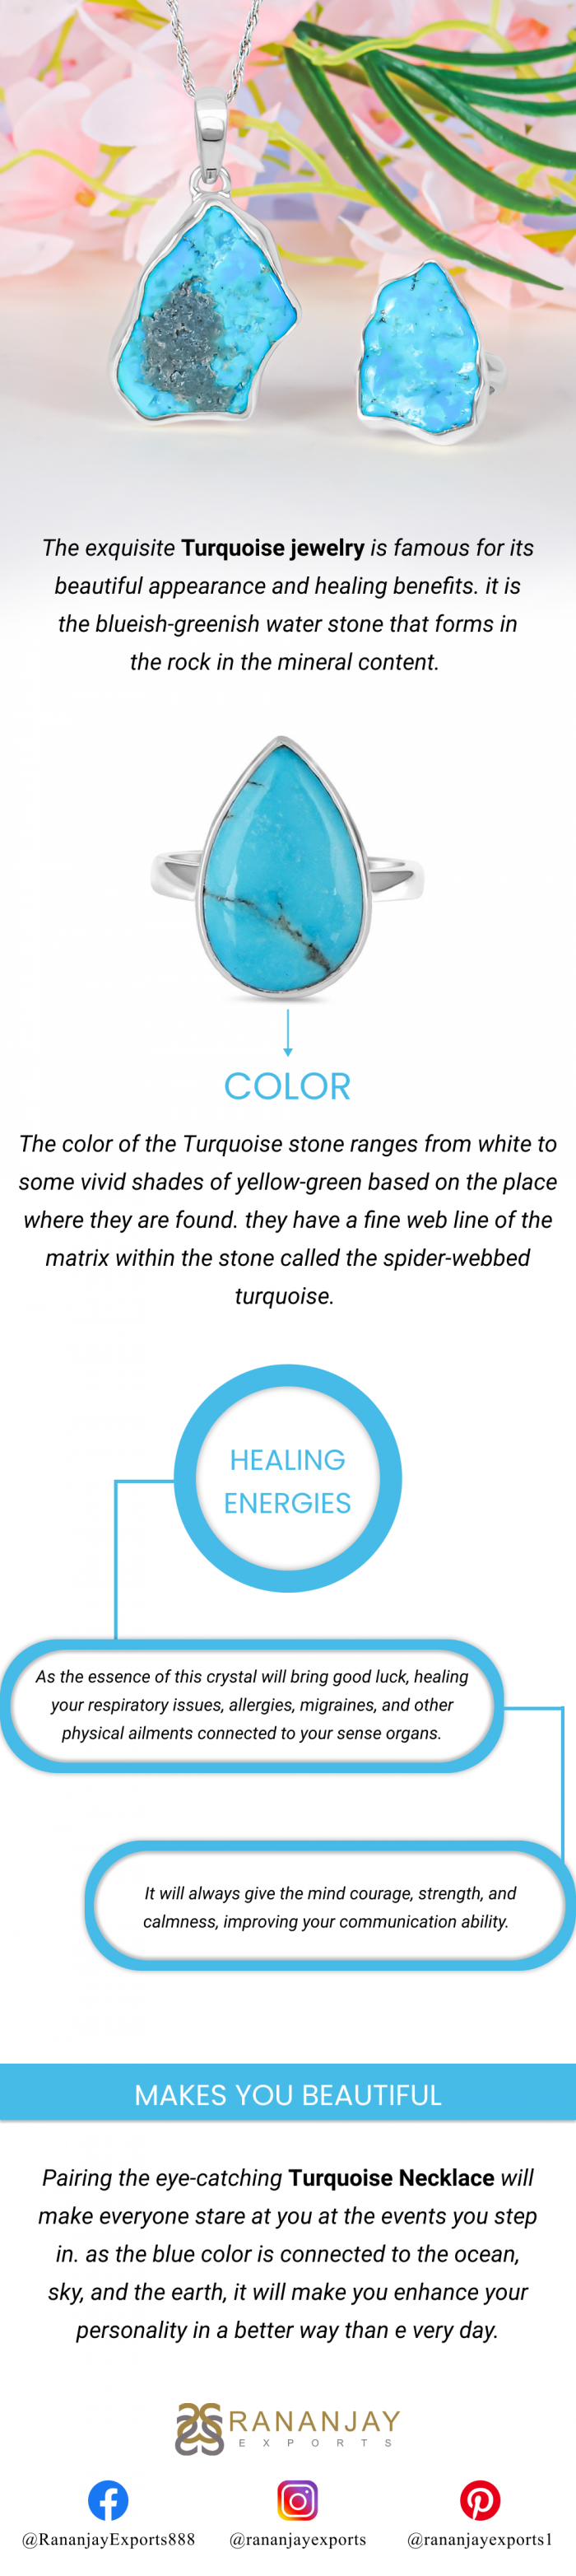 Turquoise Jewelry & Its Healing Energy